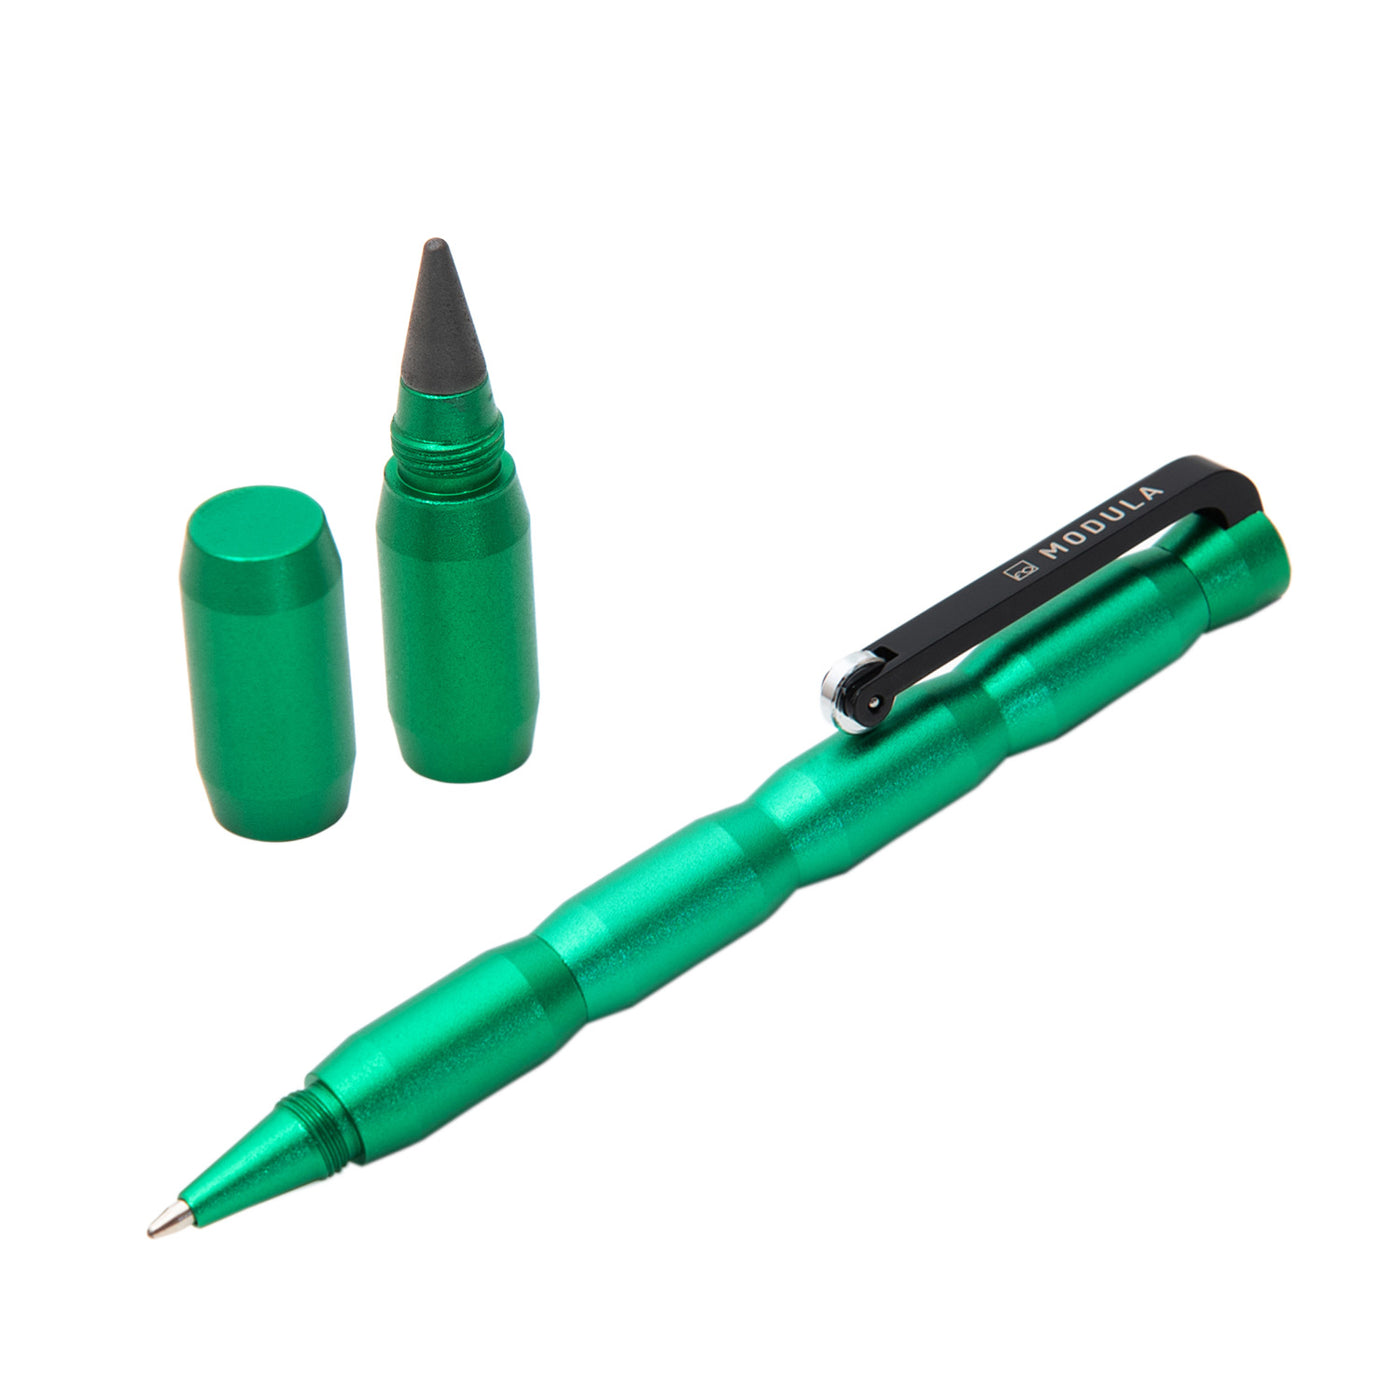 Pininfarina Segno Forever Modula Multifunction Pen - Green 1